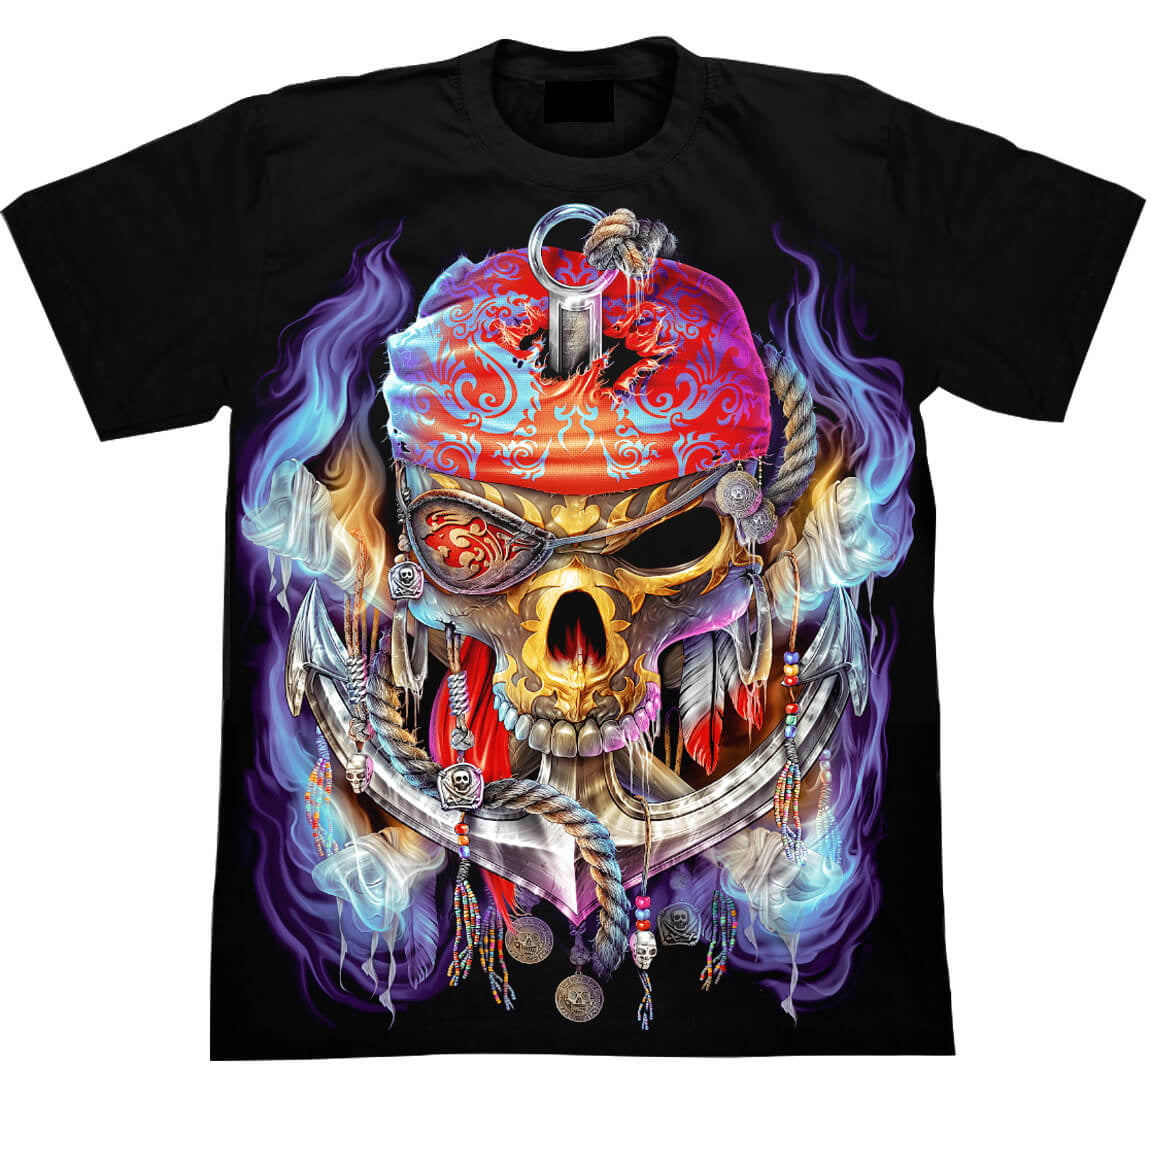 Pirate T-shirt Design